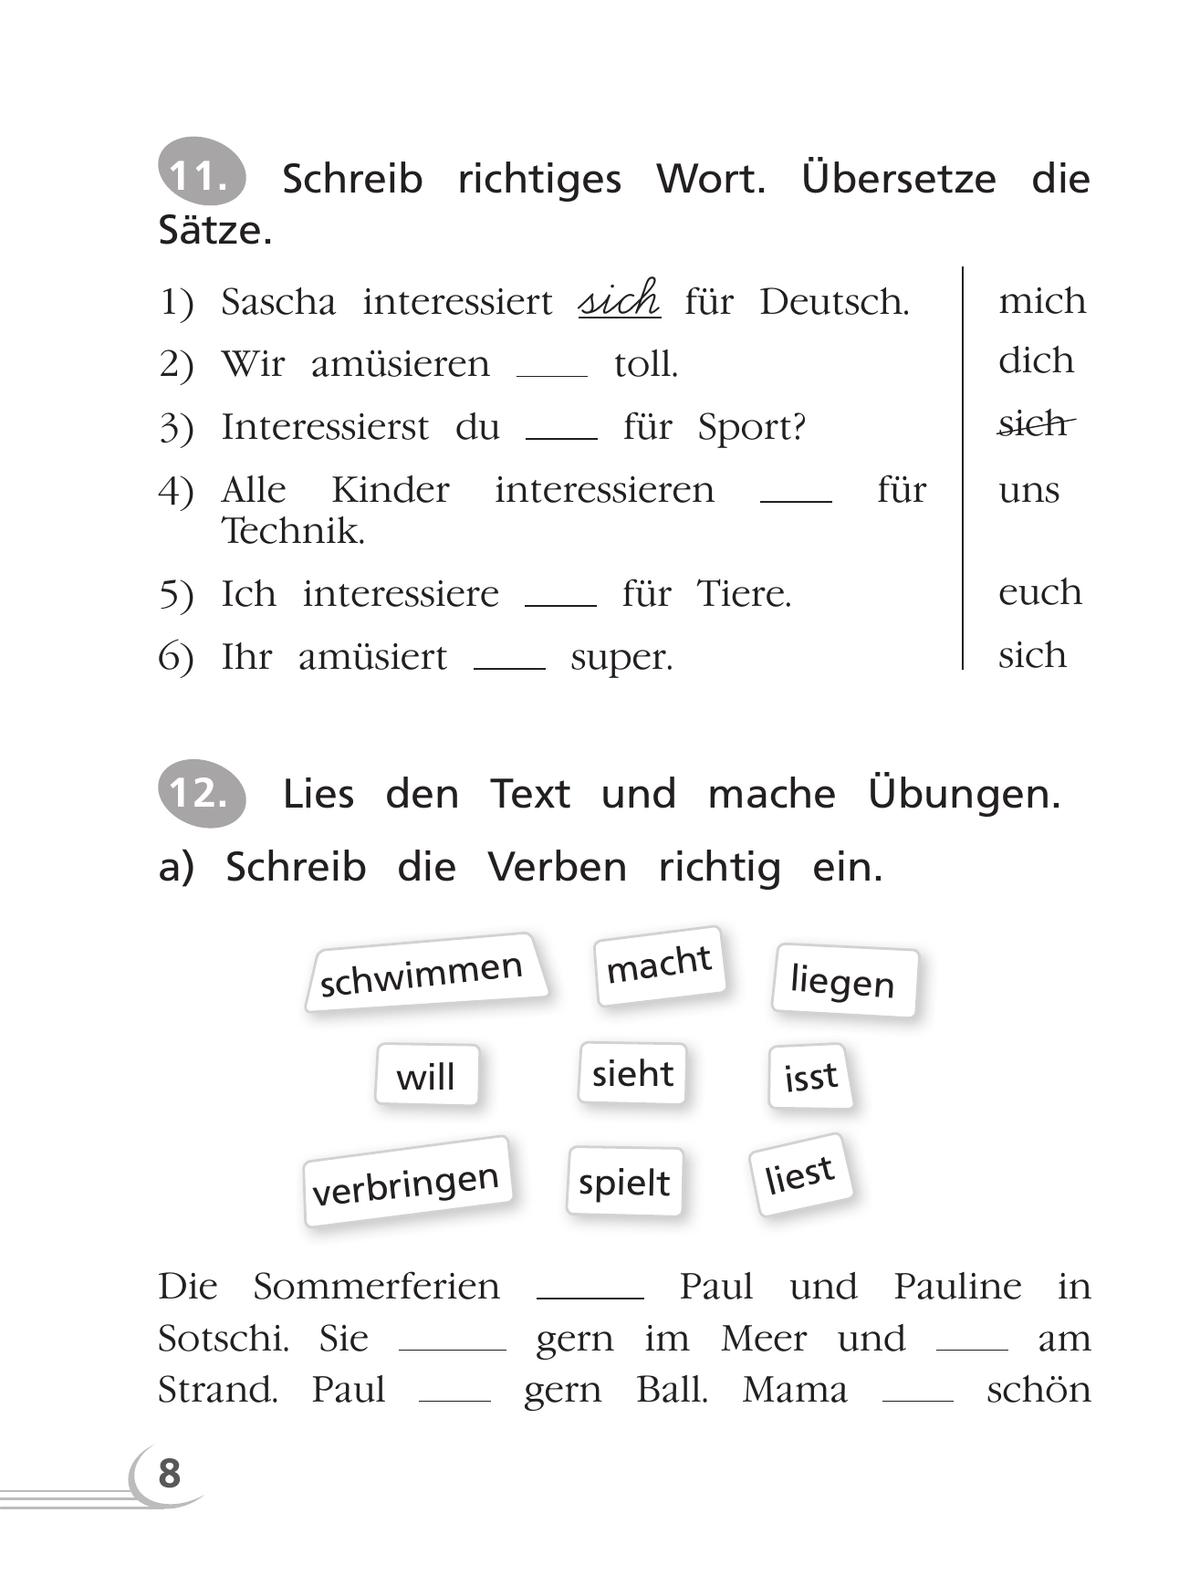 Немецкий язык. Грамматический тренажер. 3 класс 5